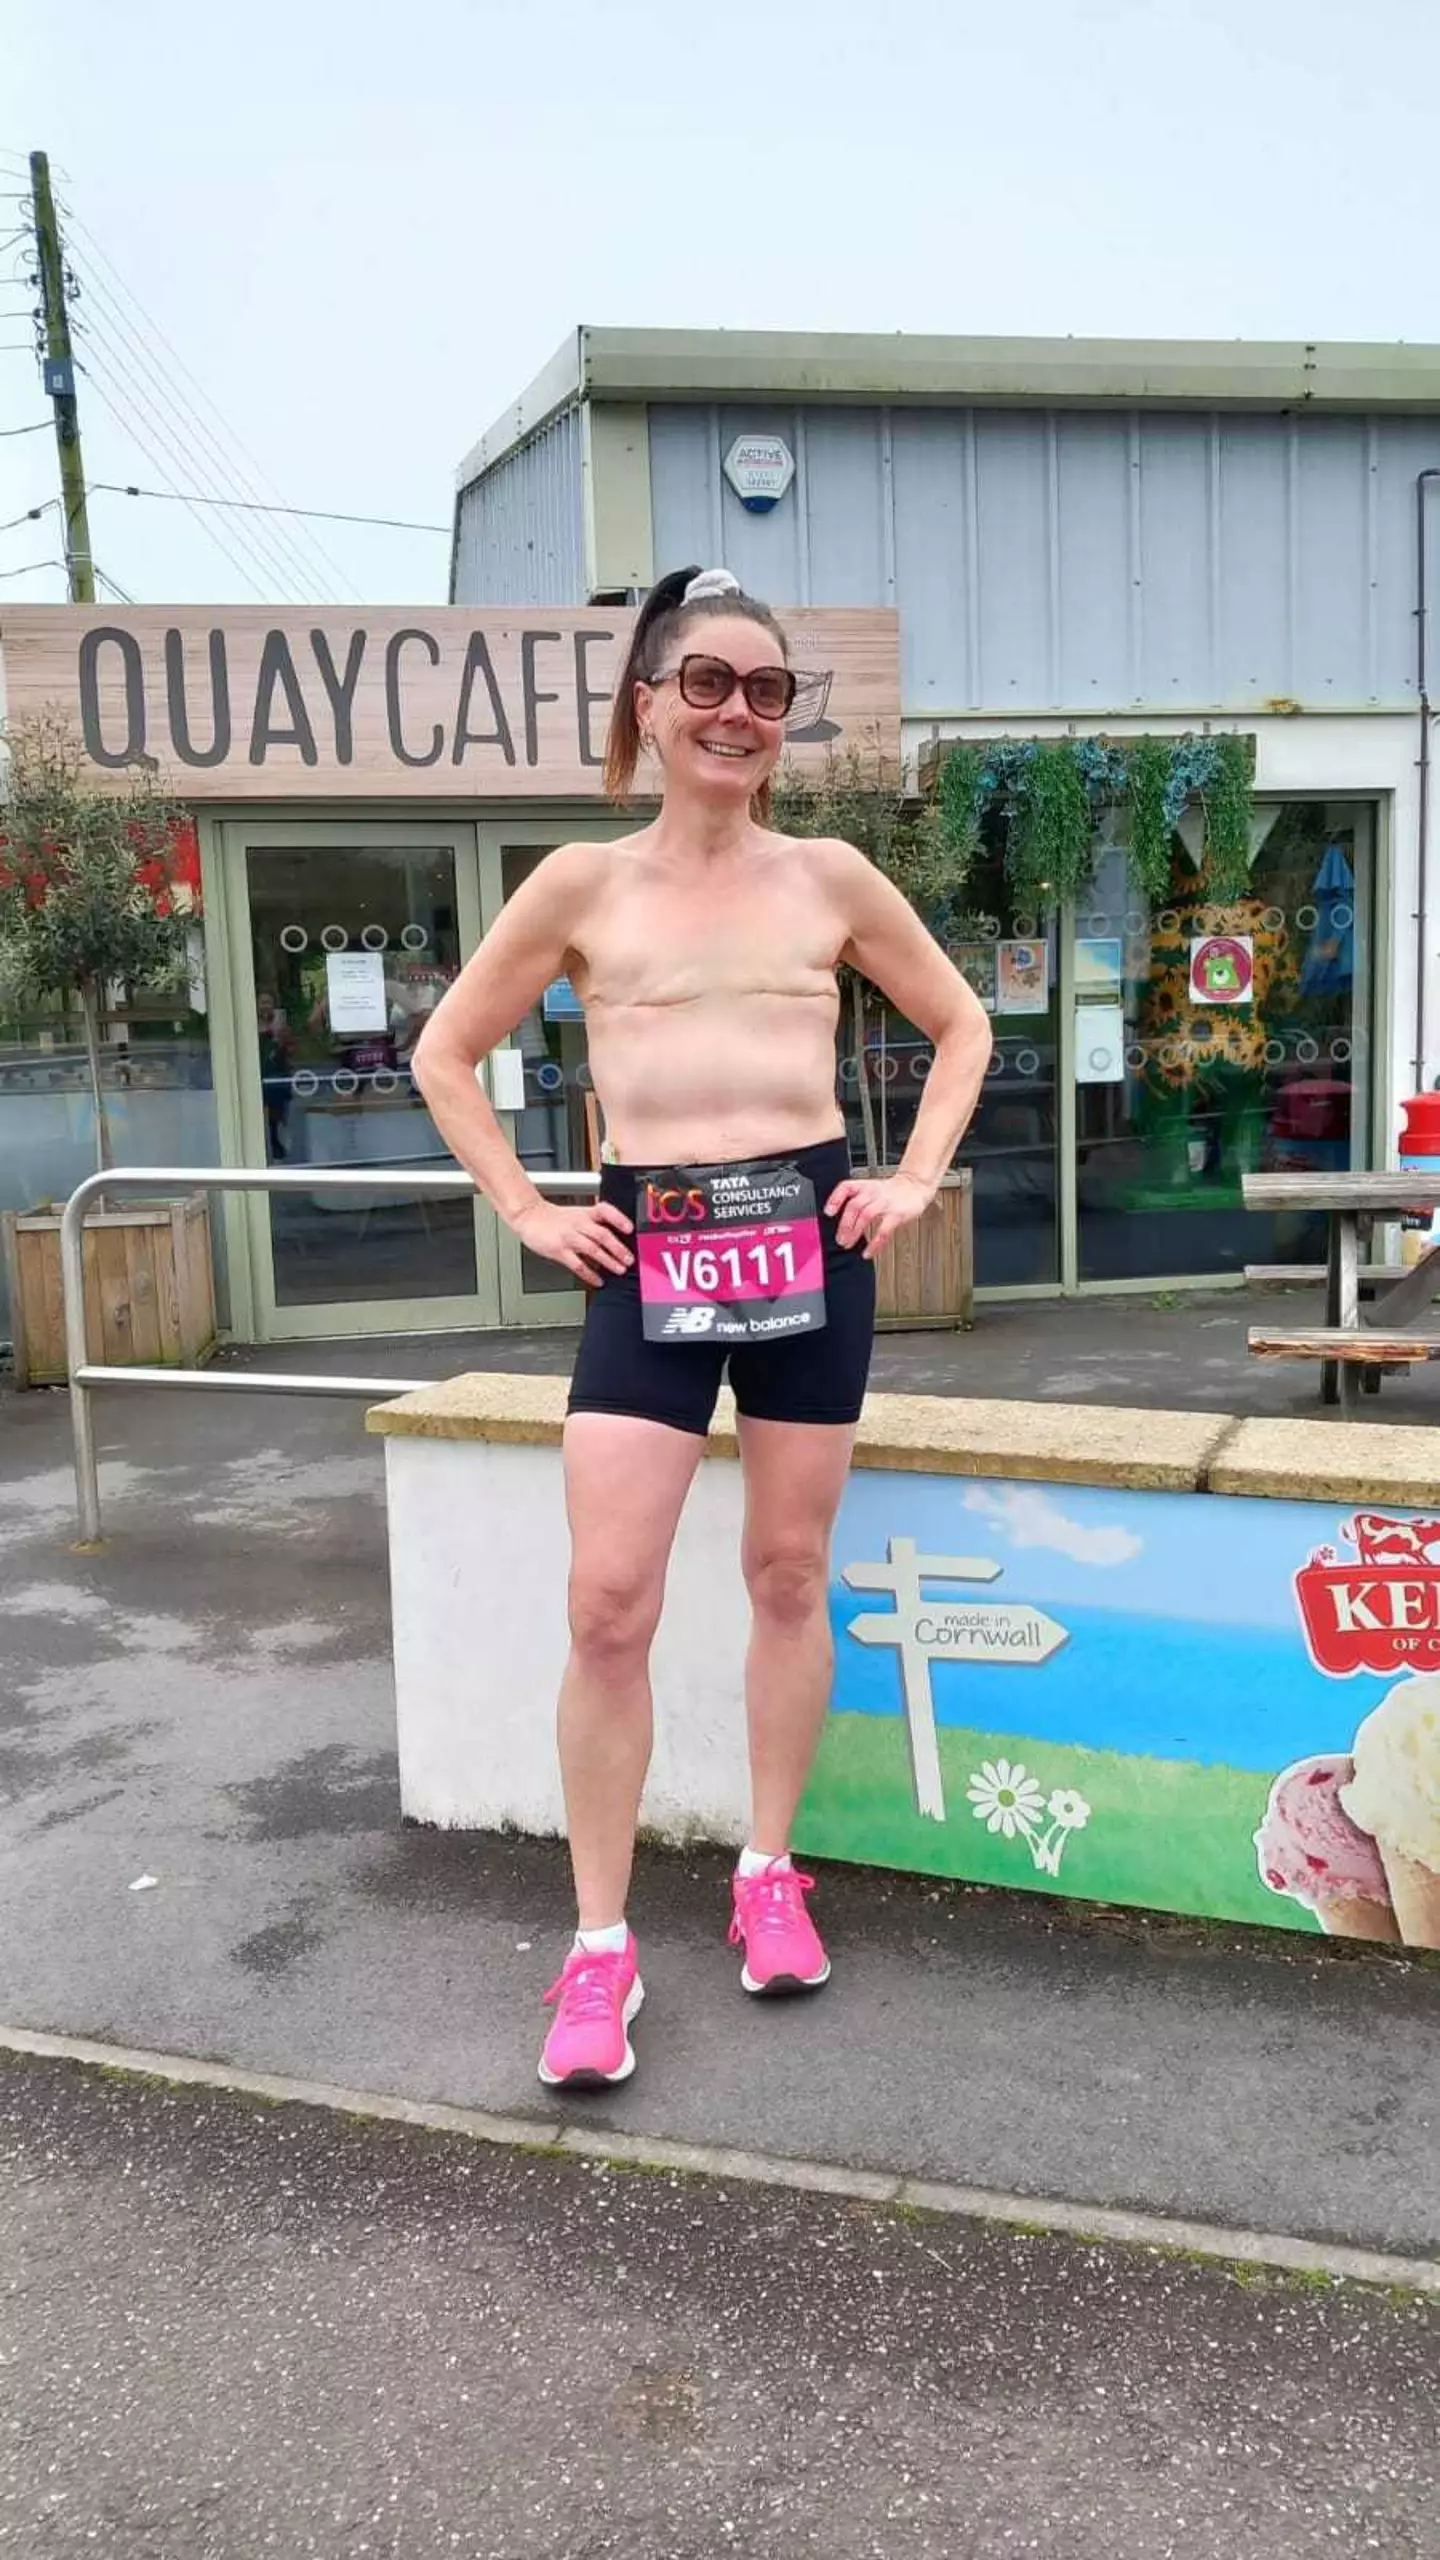 Louise ran the virtual London Marathon topless.